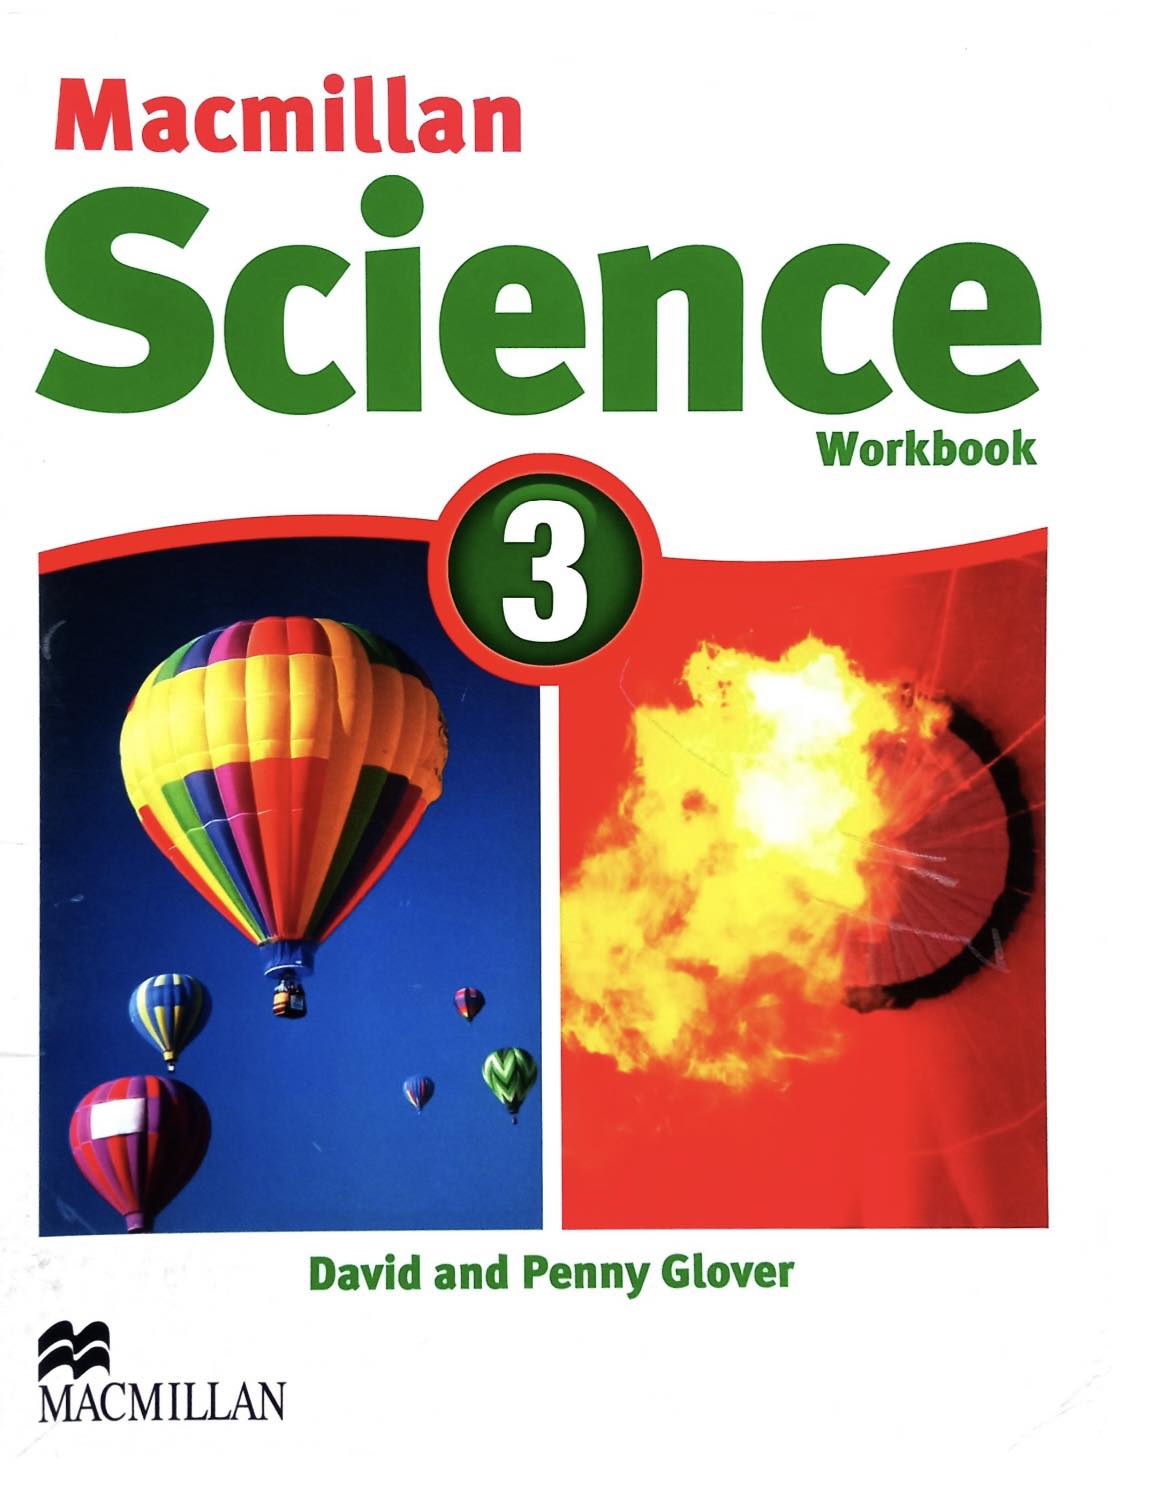 Macmillan Science Workbook eBook